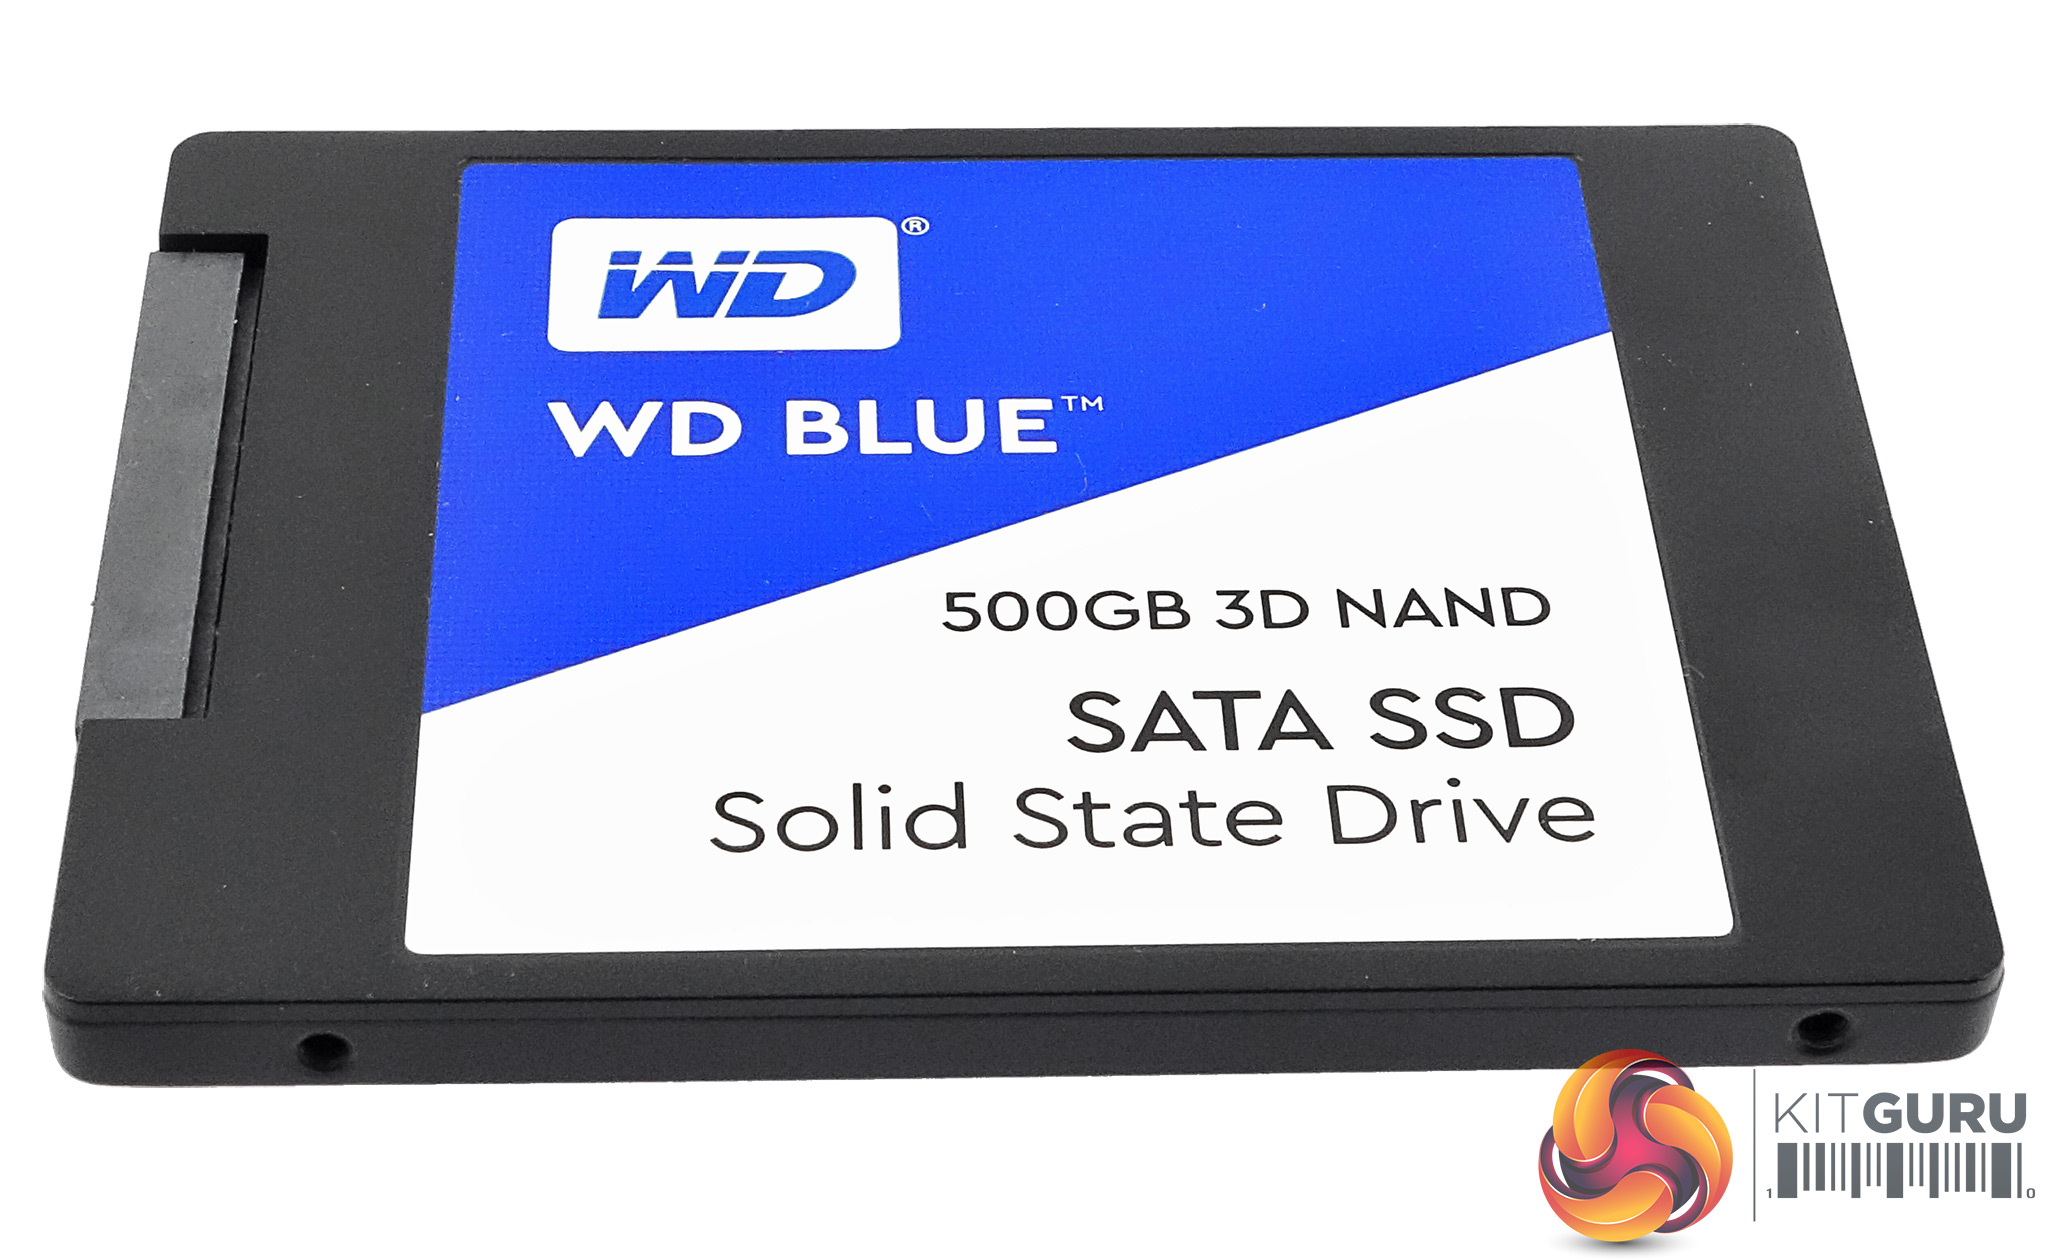 Narabar popular frío WD Blue 3D NAND 500GB SSD Review | KitGuru